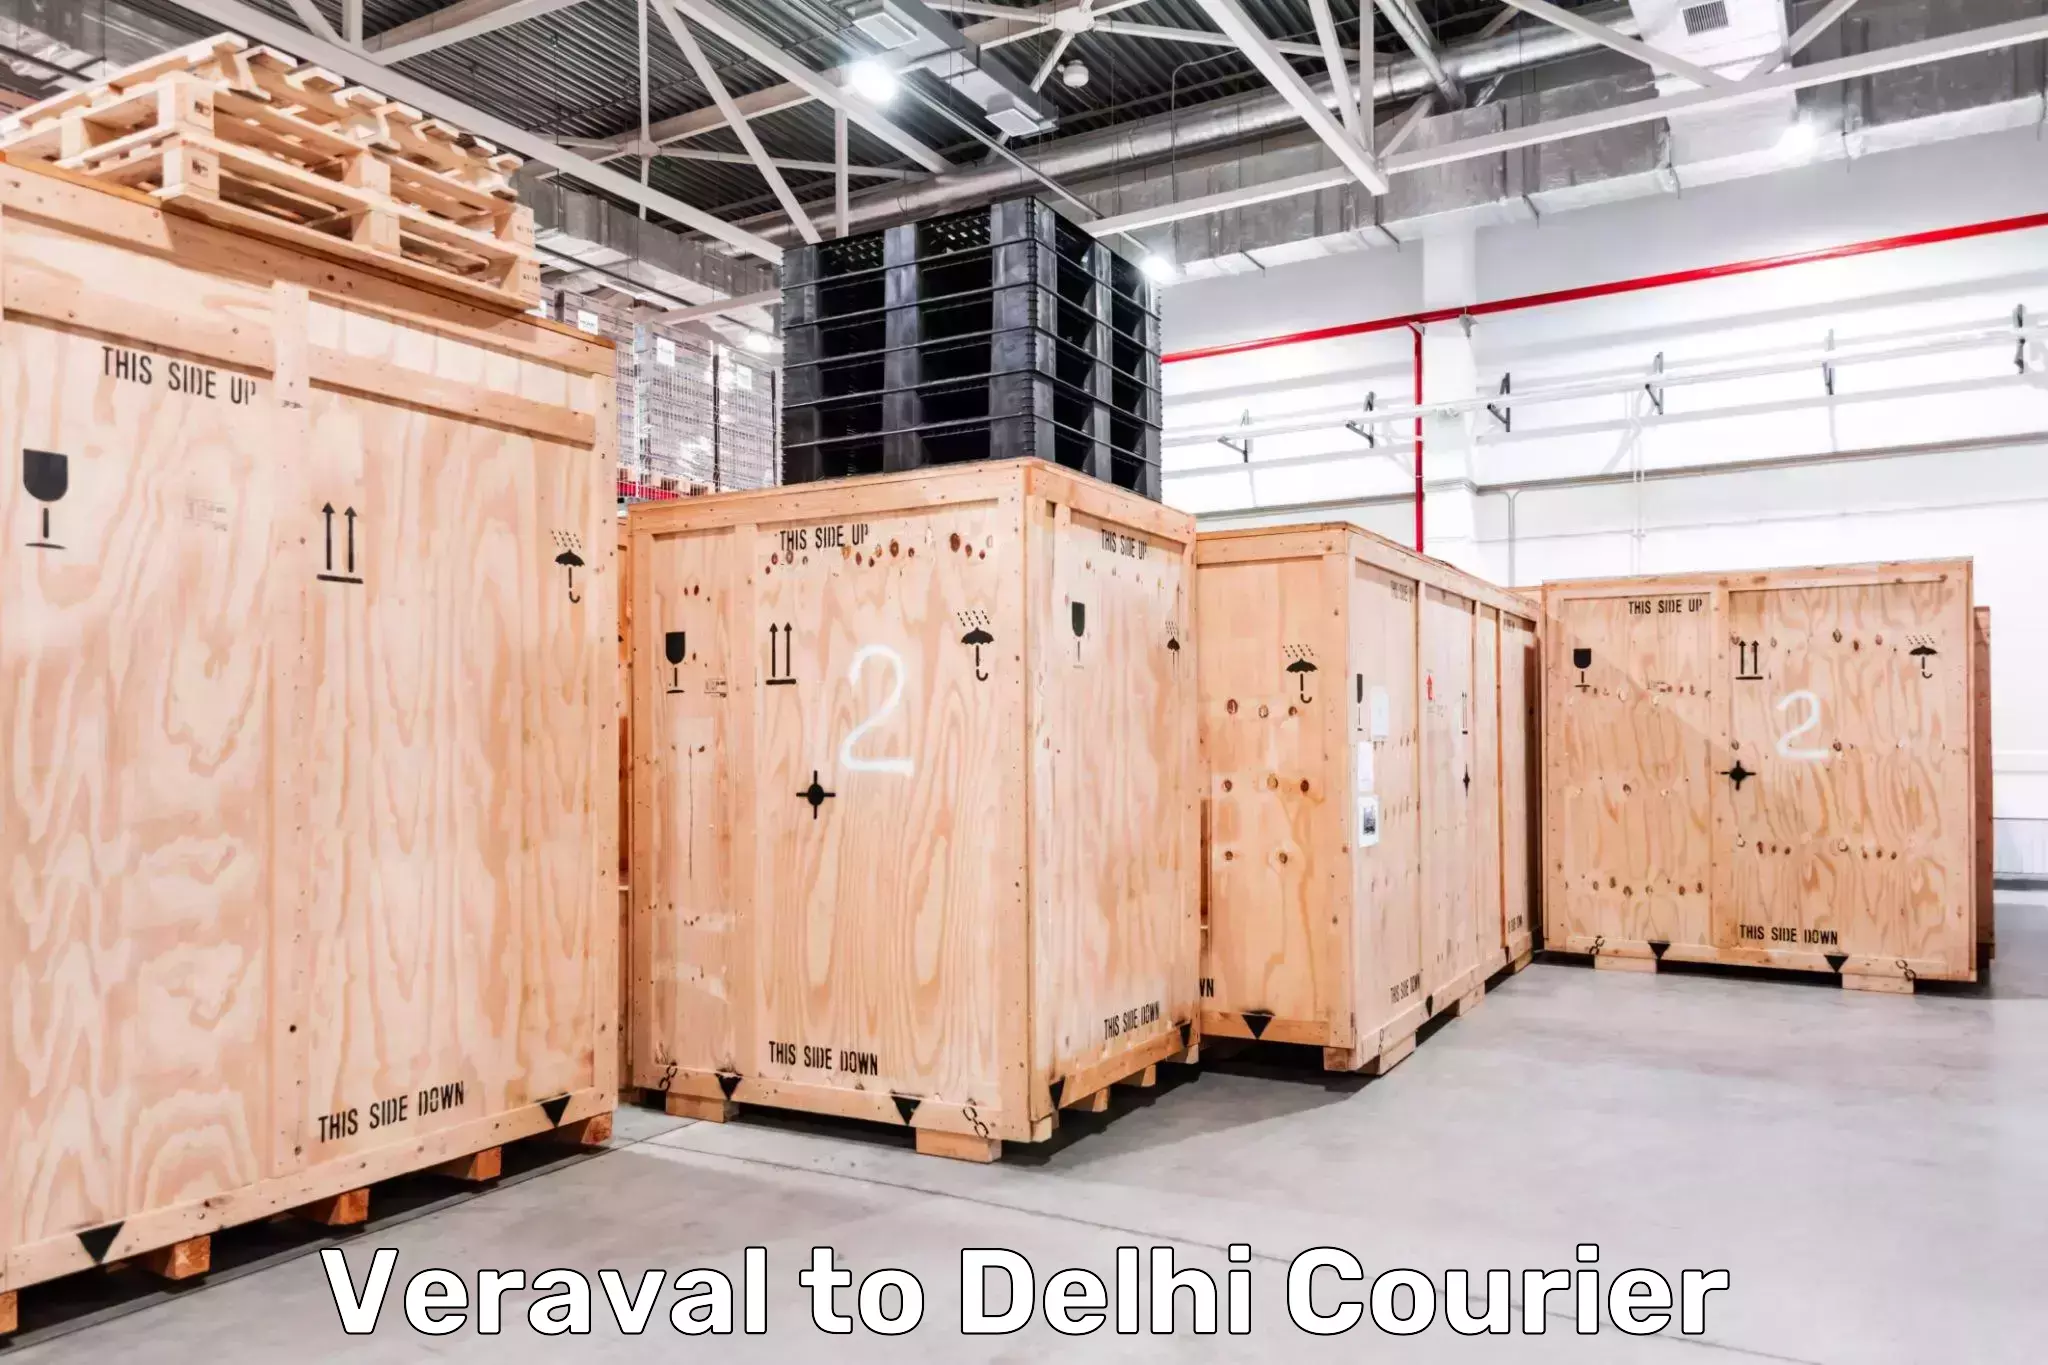 On-call courier service Veraval to Delhi